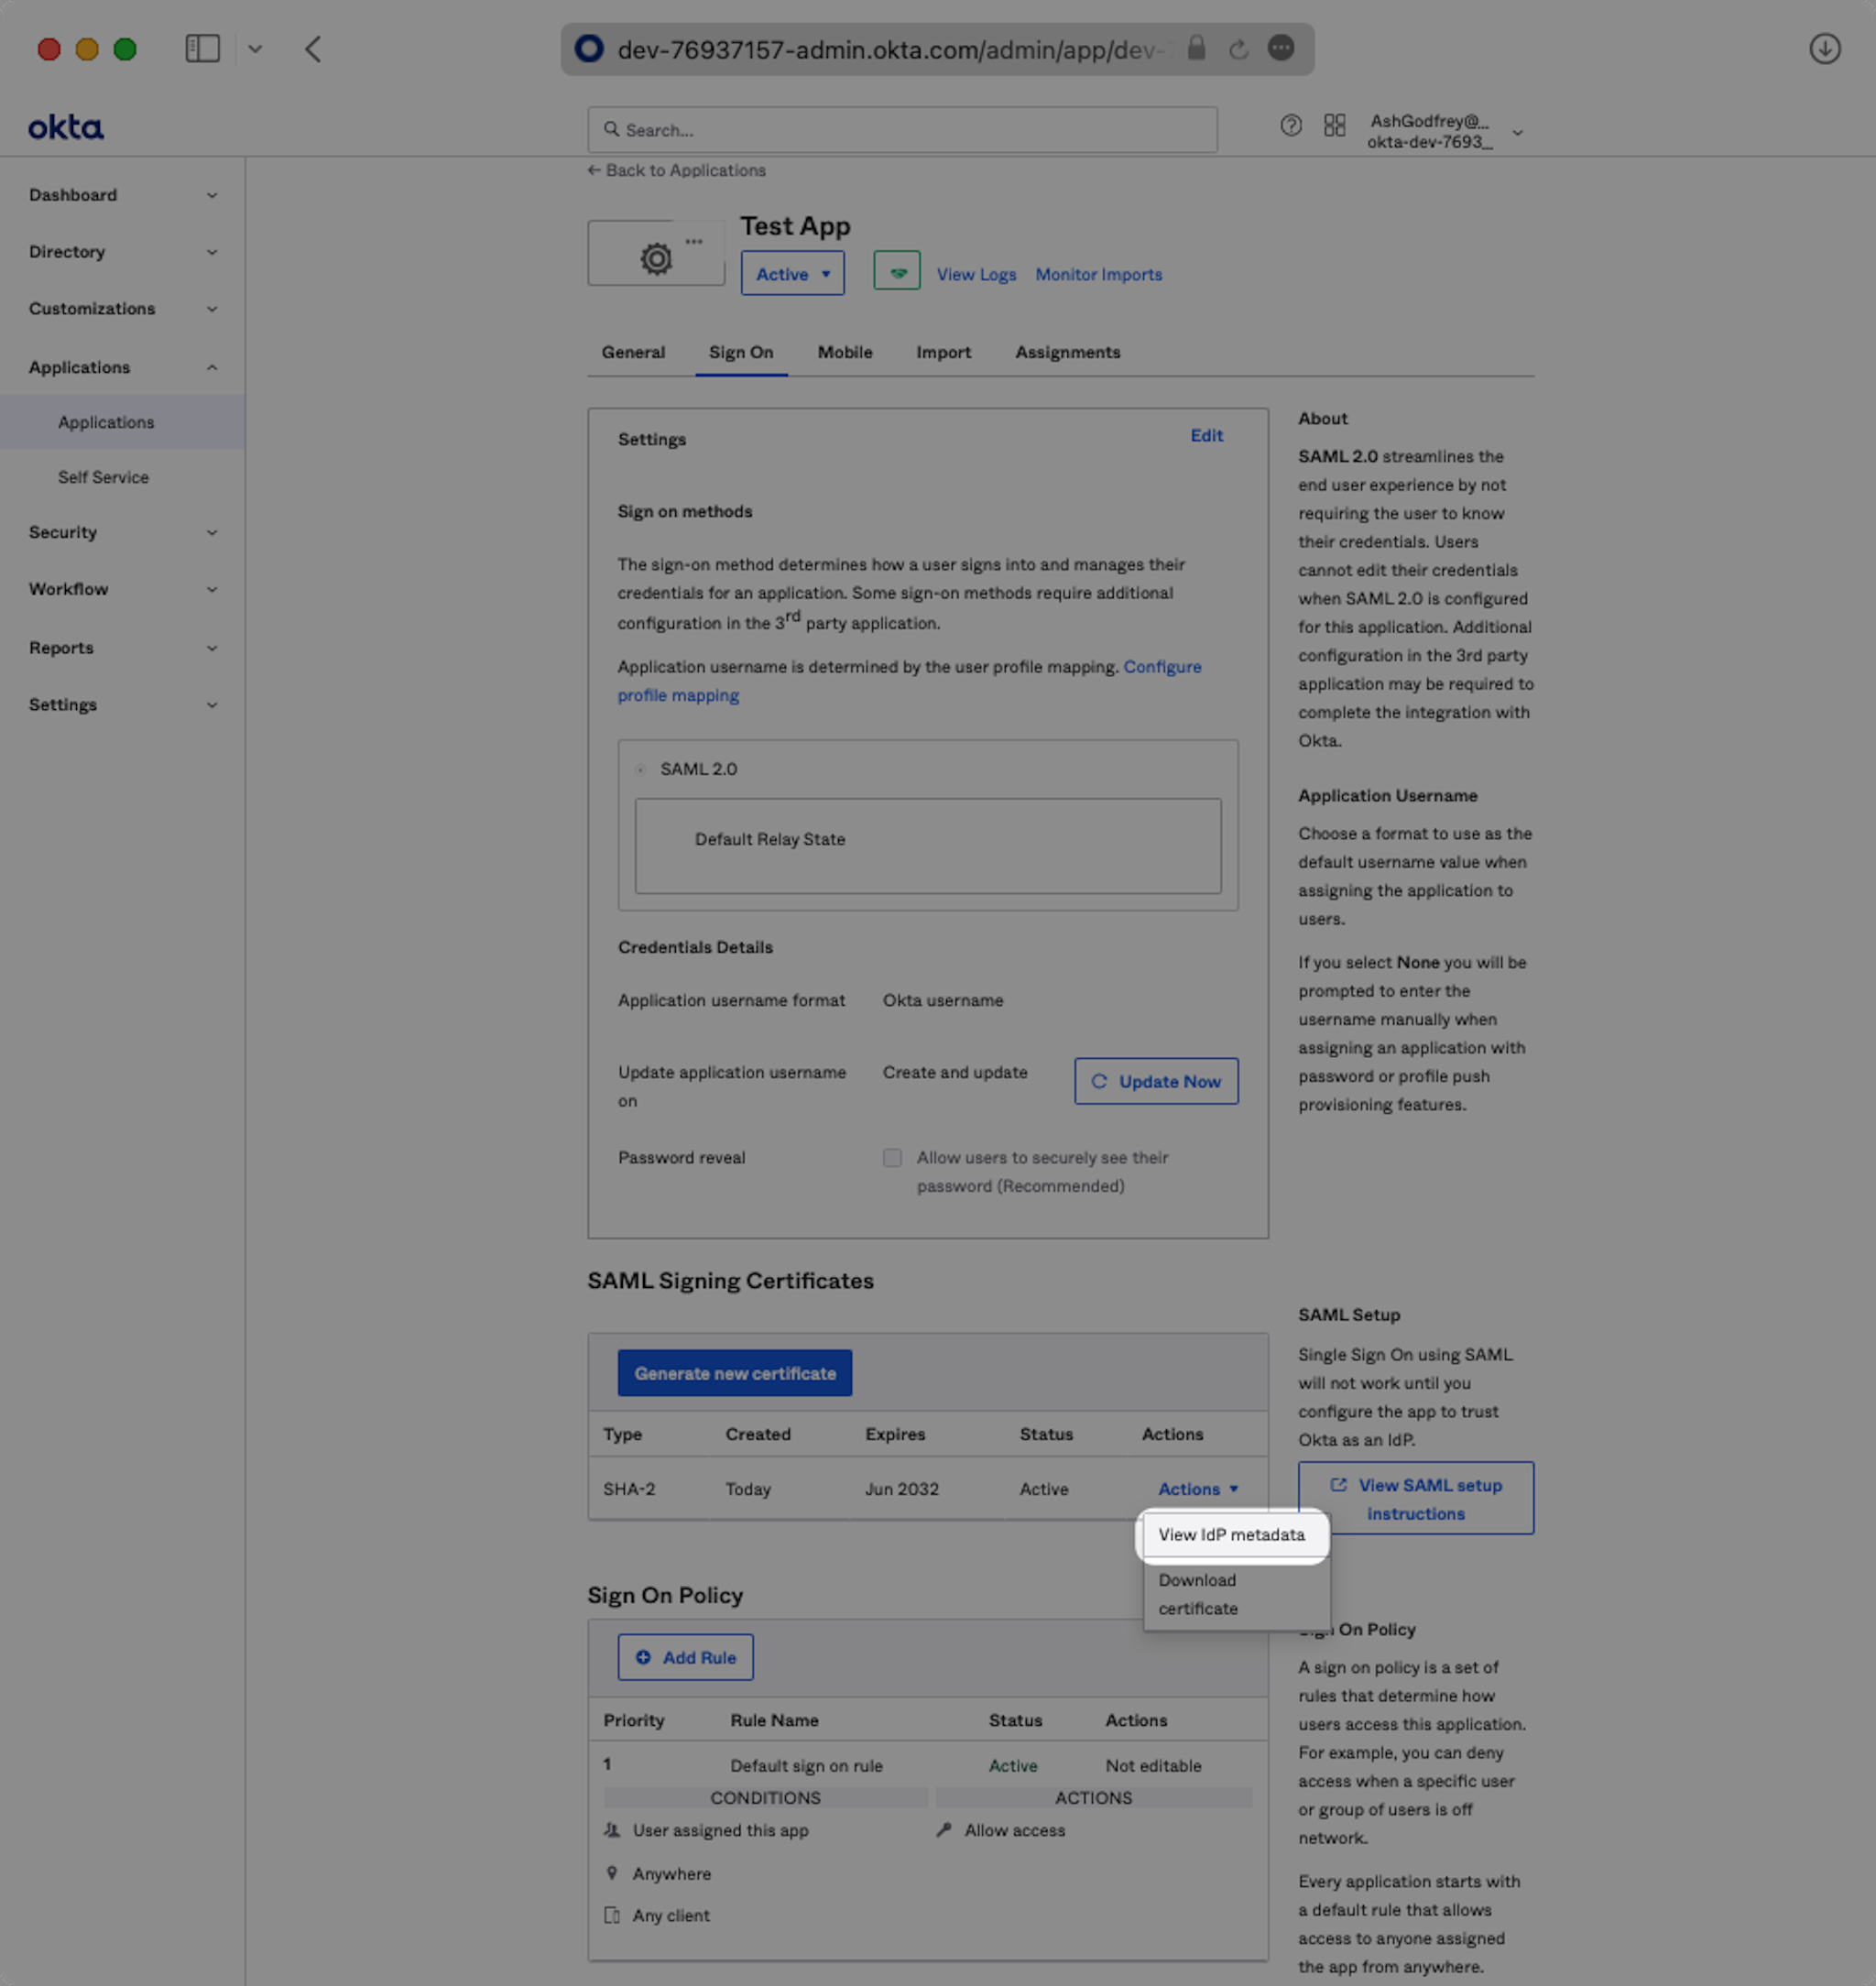 A screenshot showing the "View IdP Metadata" selection in the Okta Dashboard.